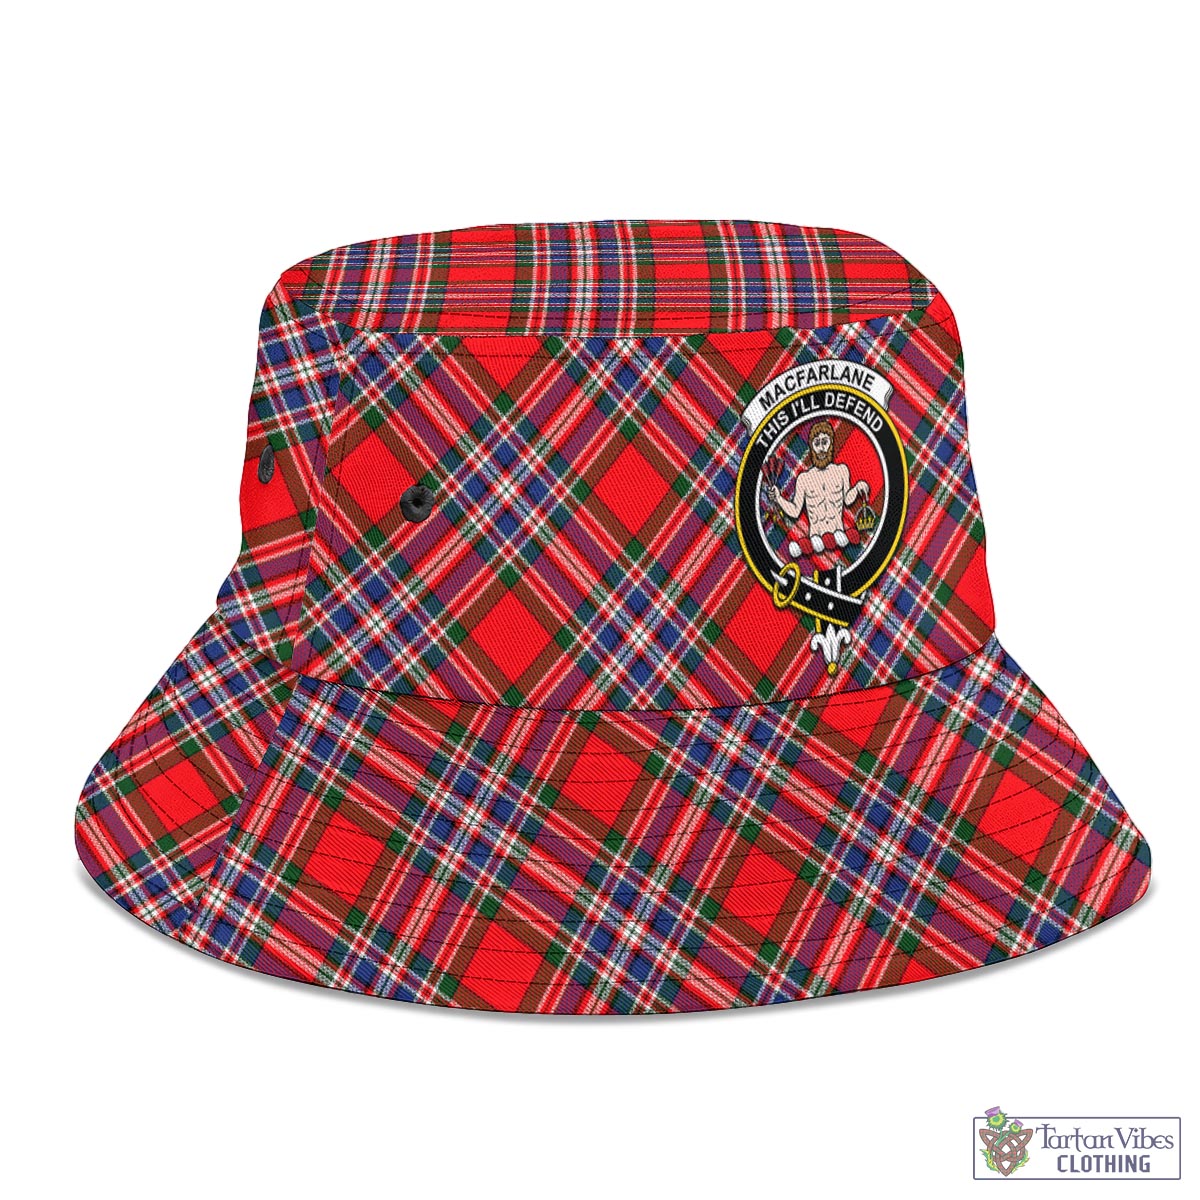 Tartan Vibes Clothing MacFarlane Modern Tartan Bucket Hat with Family Crest